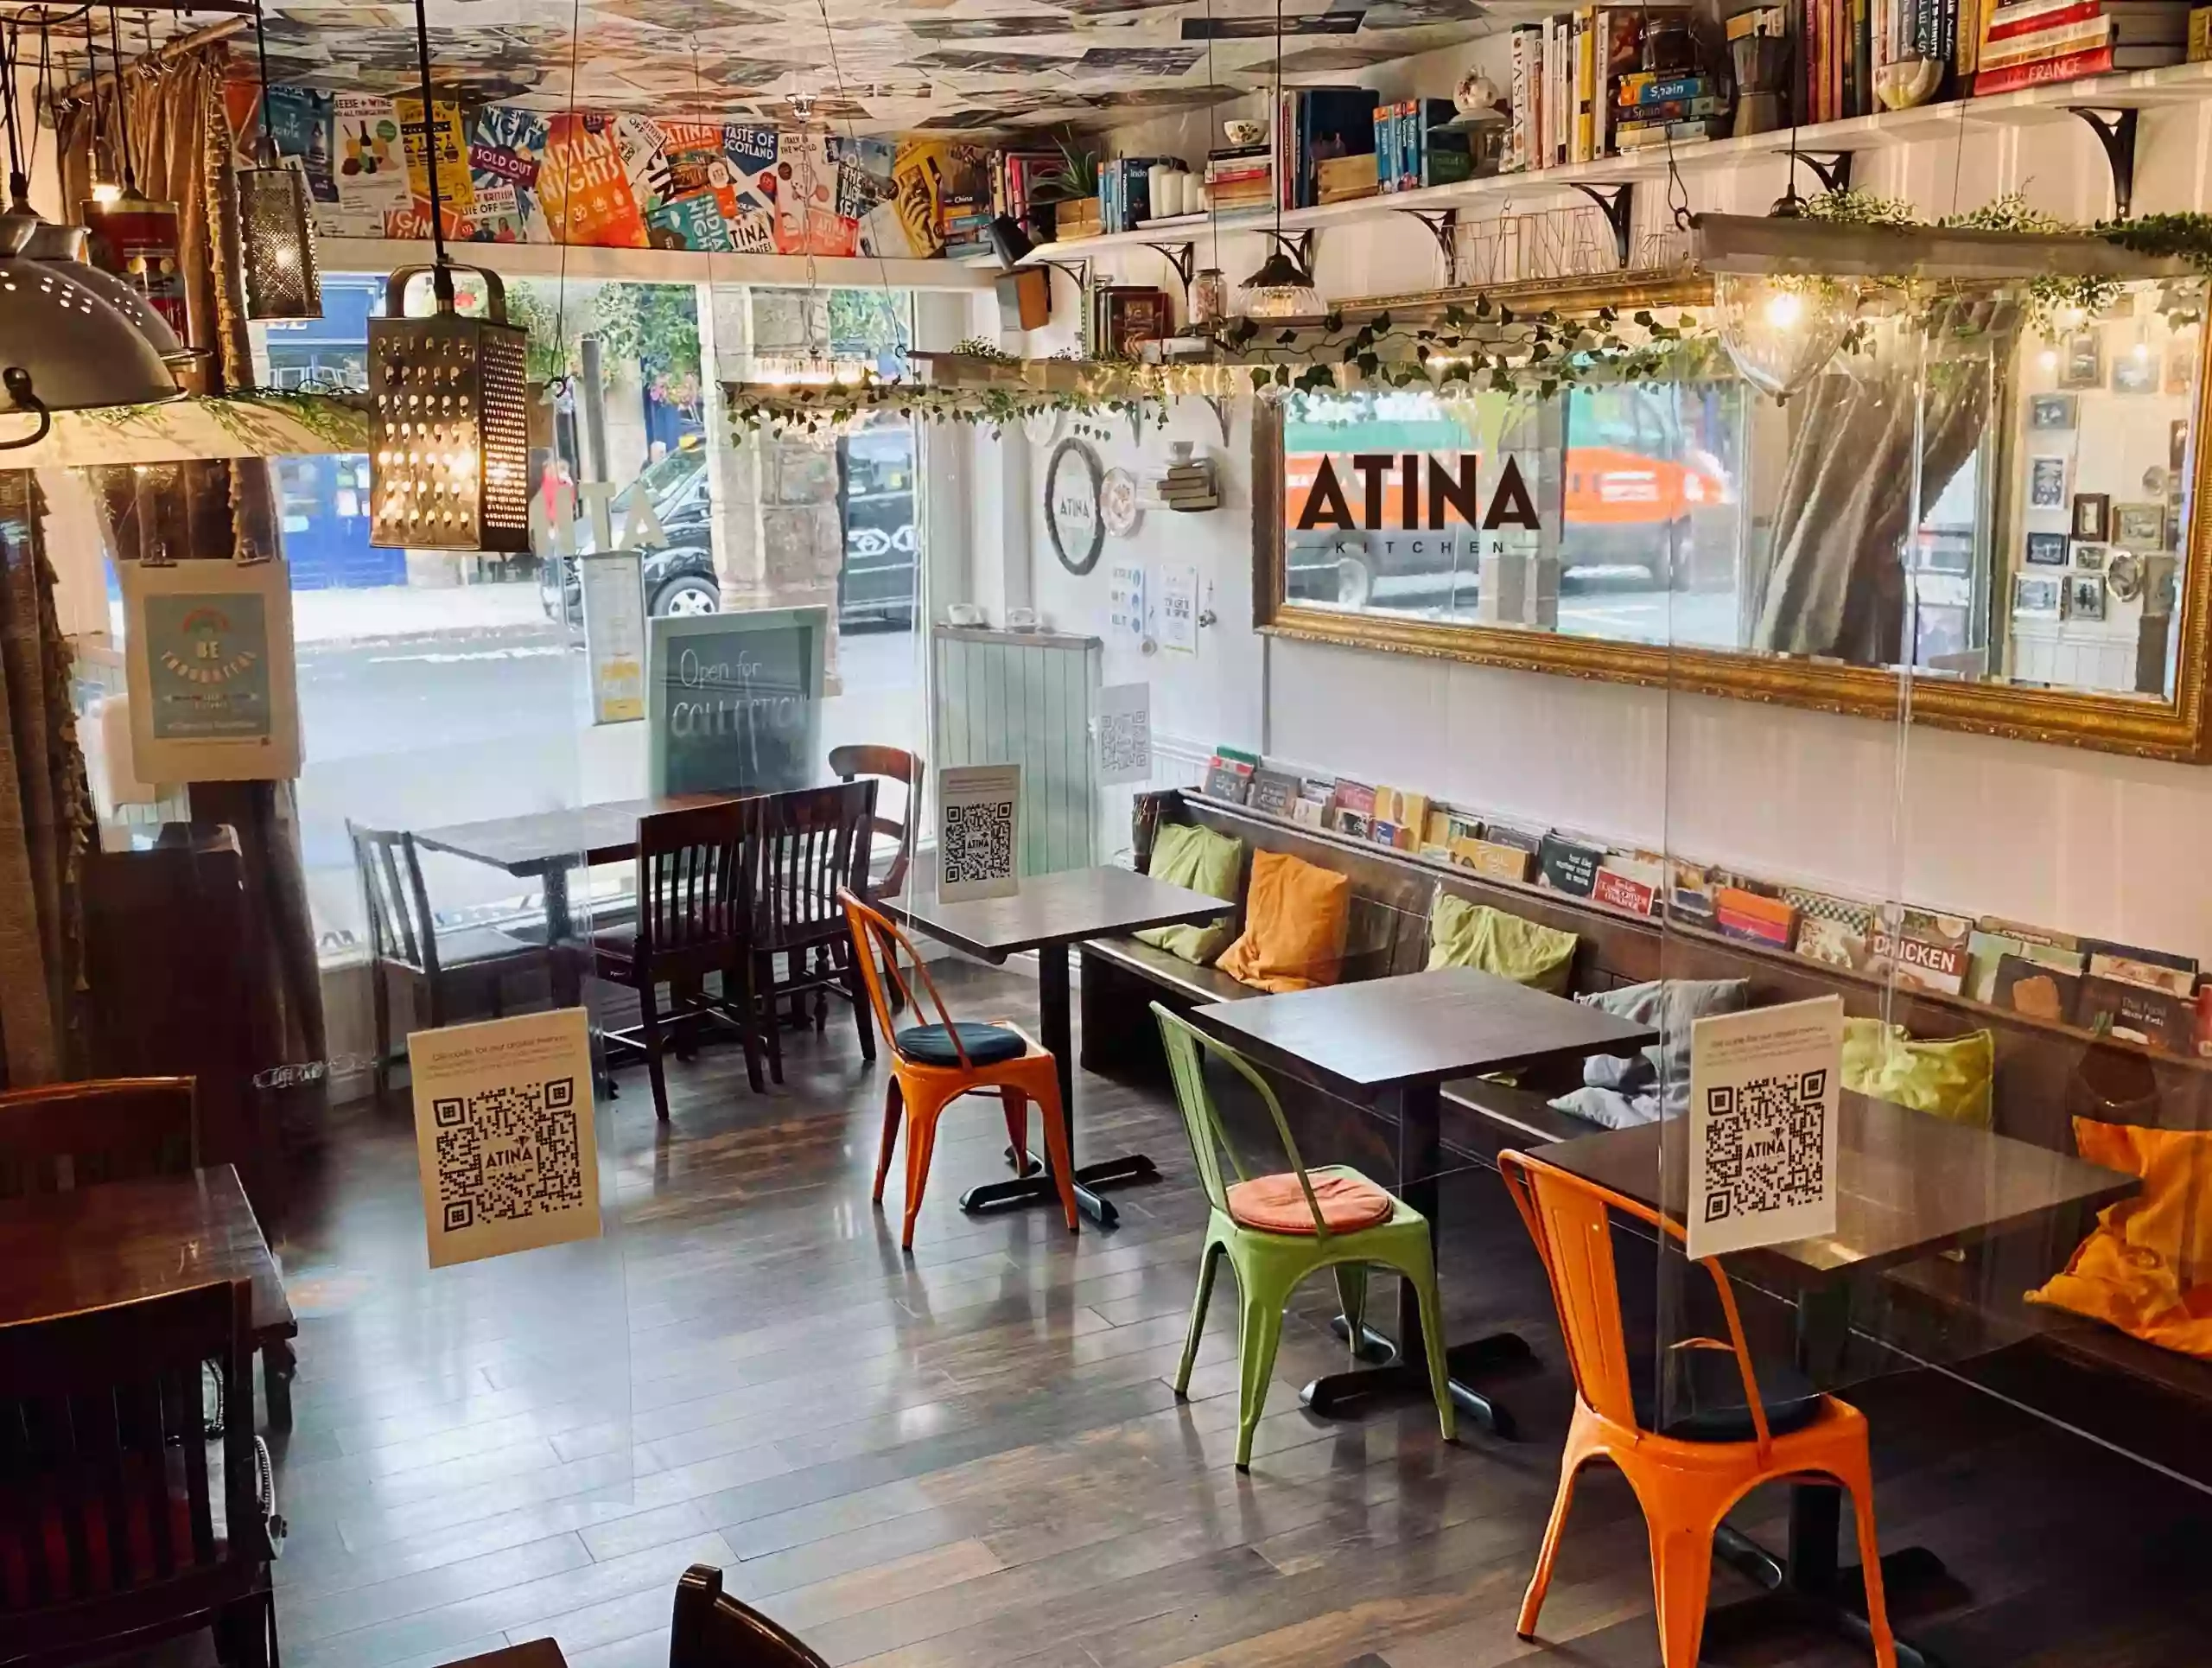 Atina Kitchen